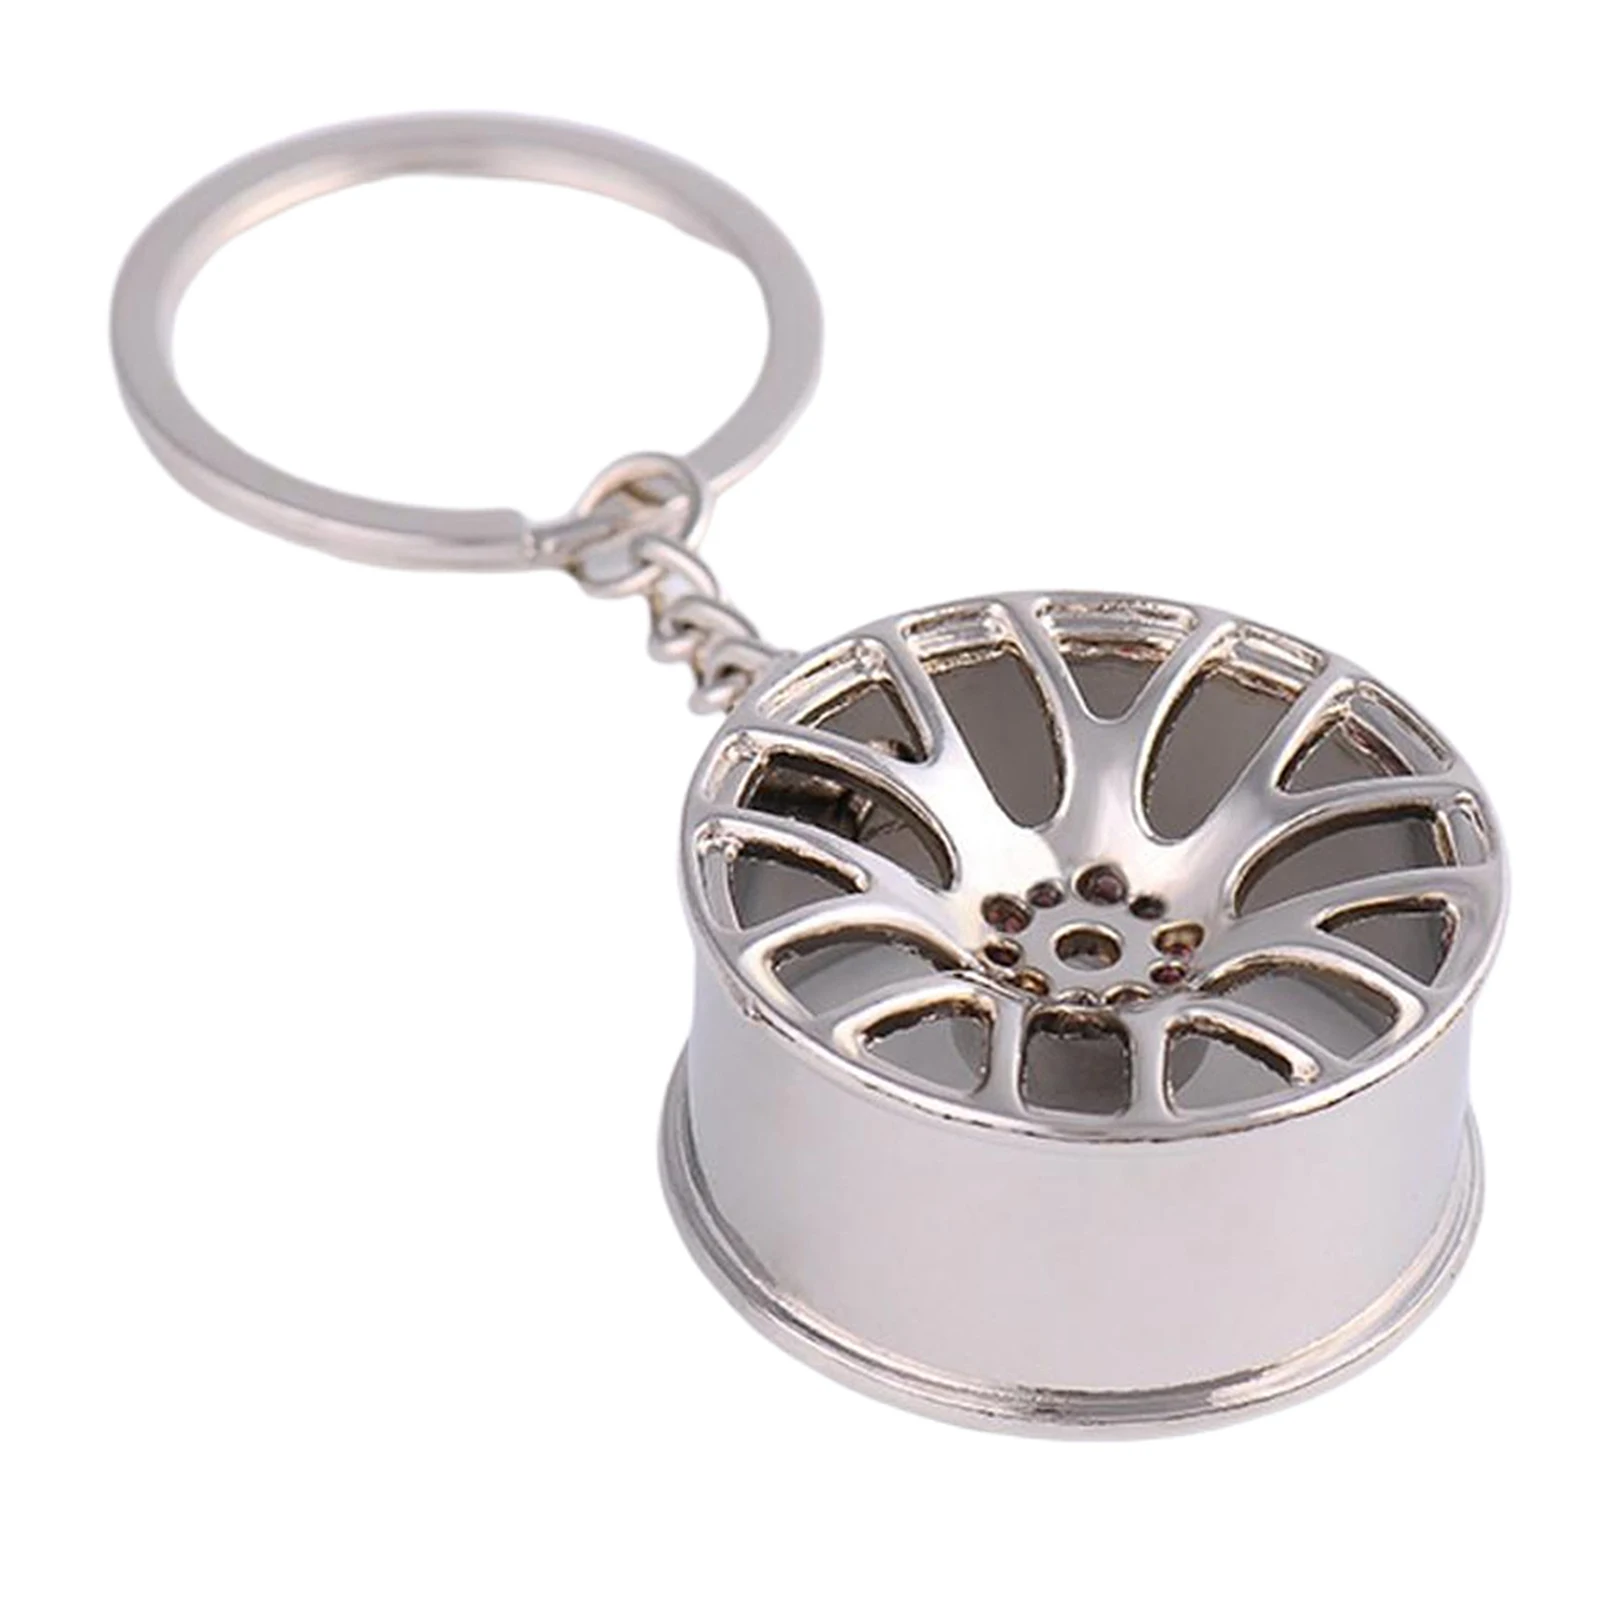 Fashion Creative Metal Wheel Rim Keychain Auto Car Handbag Bag Wheel Hubs Keyring Hanging Decor Ornament Gift